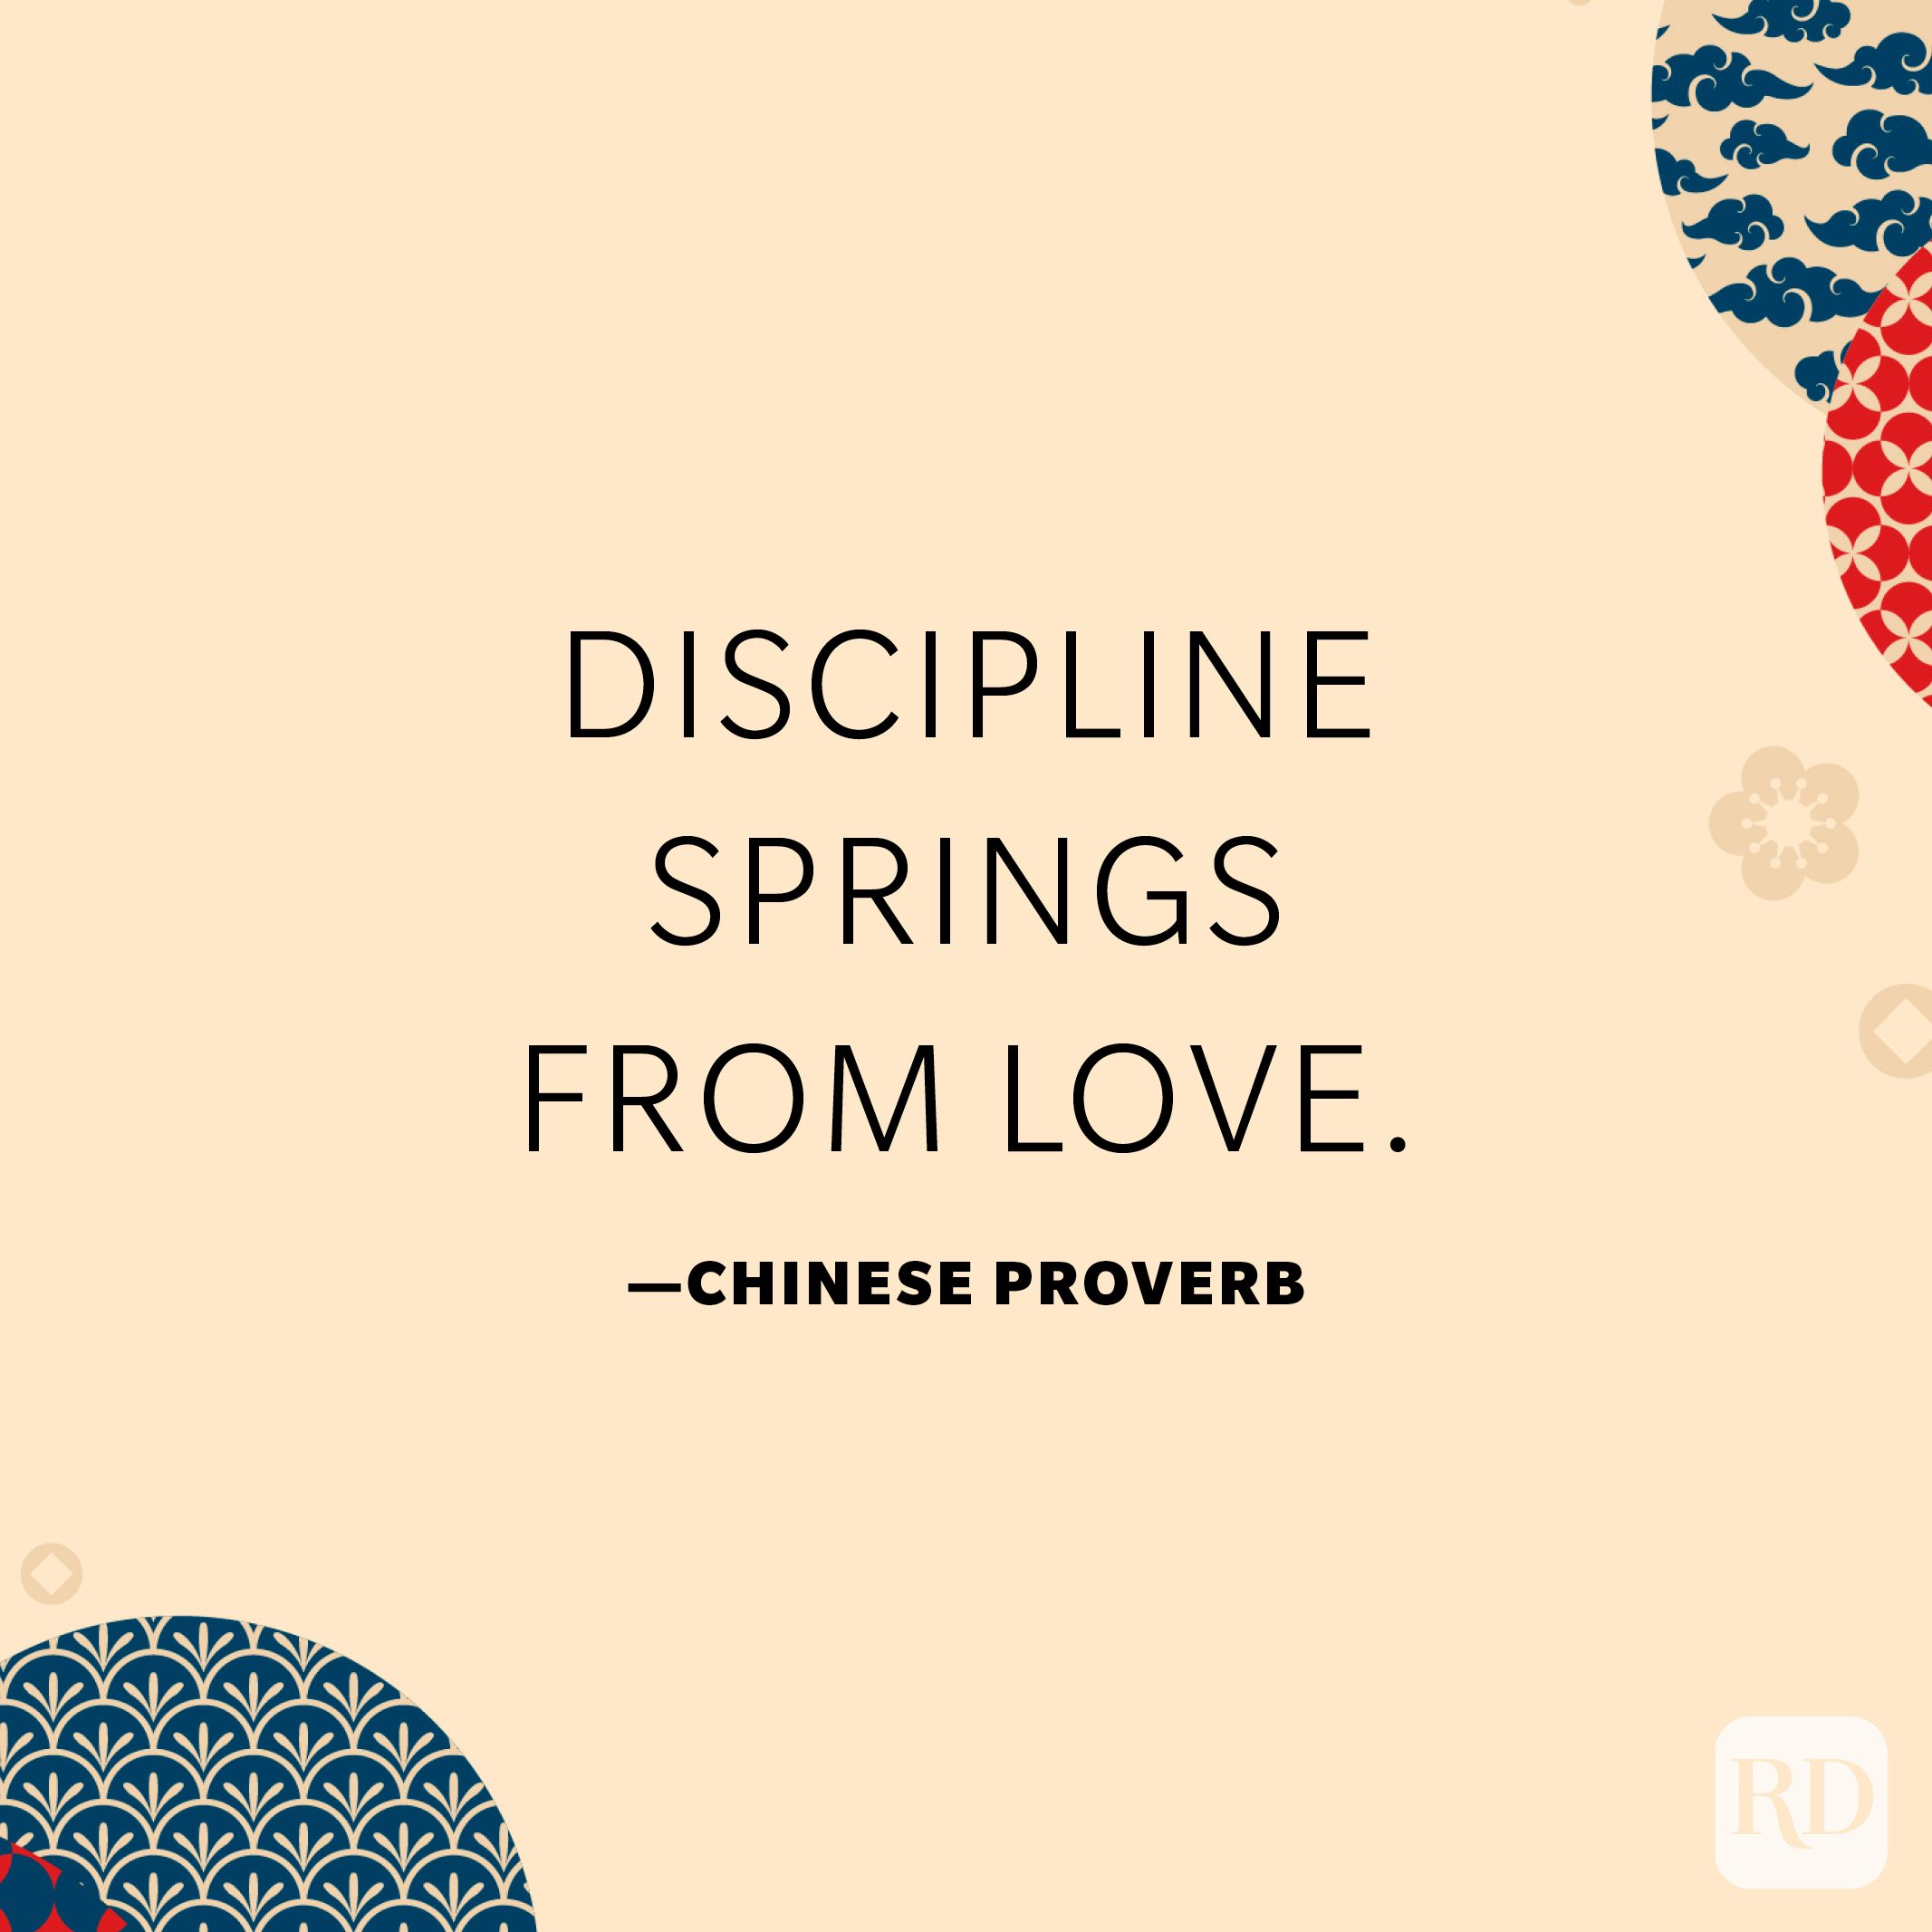 Discipline springs from love.